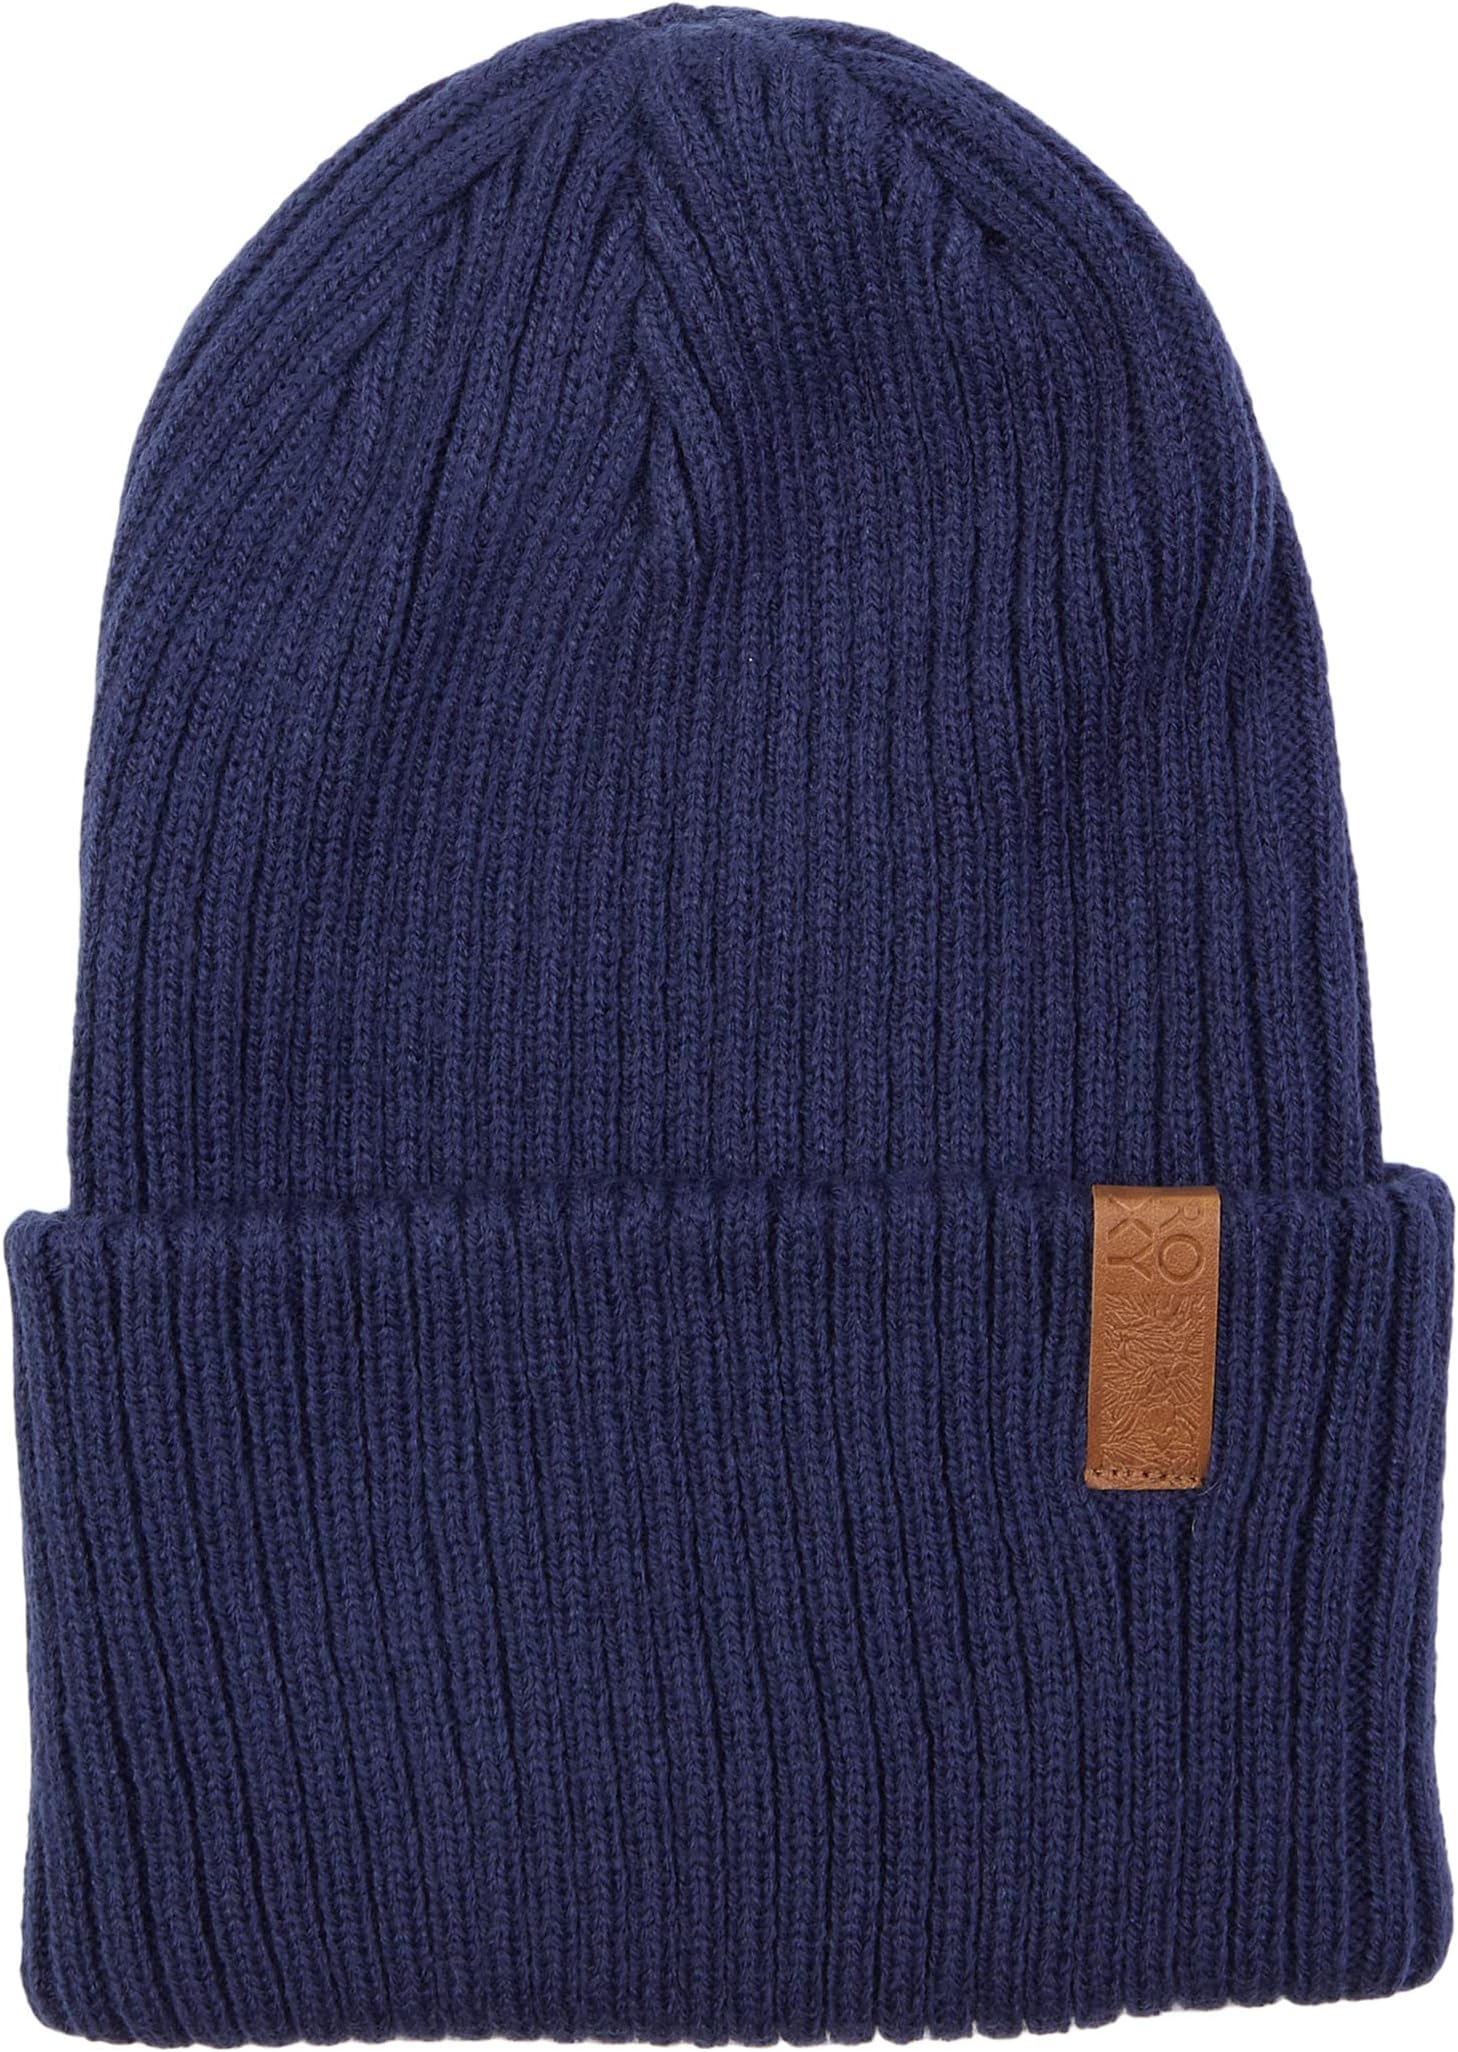 шапка Dynabeat Roxy, цвет Medieval Blue шапка roxy 2022 23 celestybeanie hdwr medieval blue